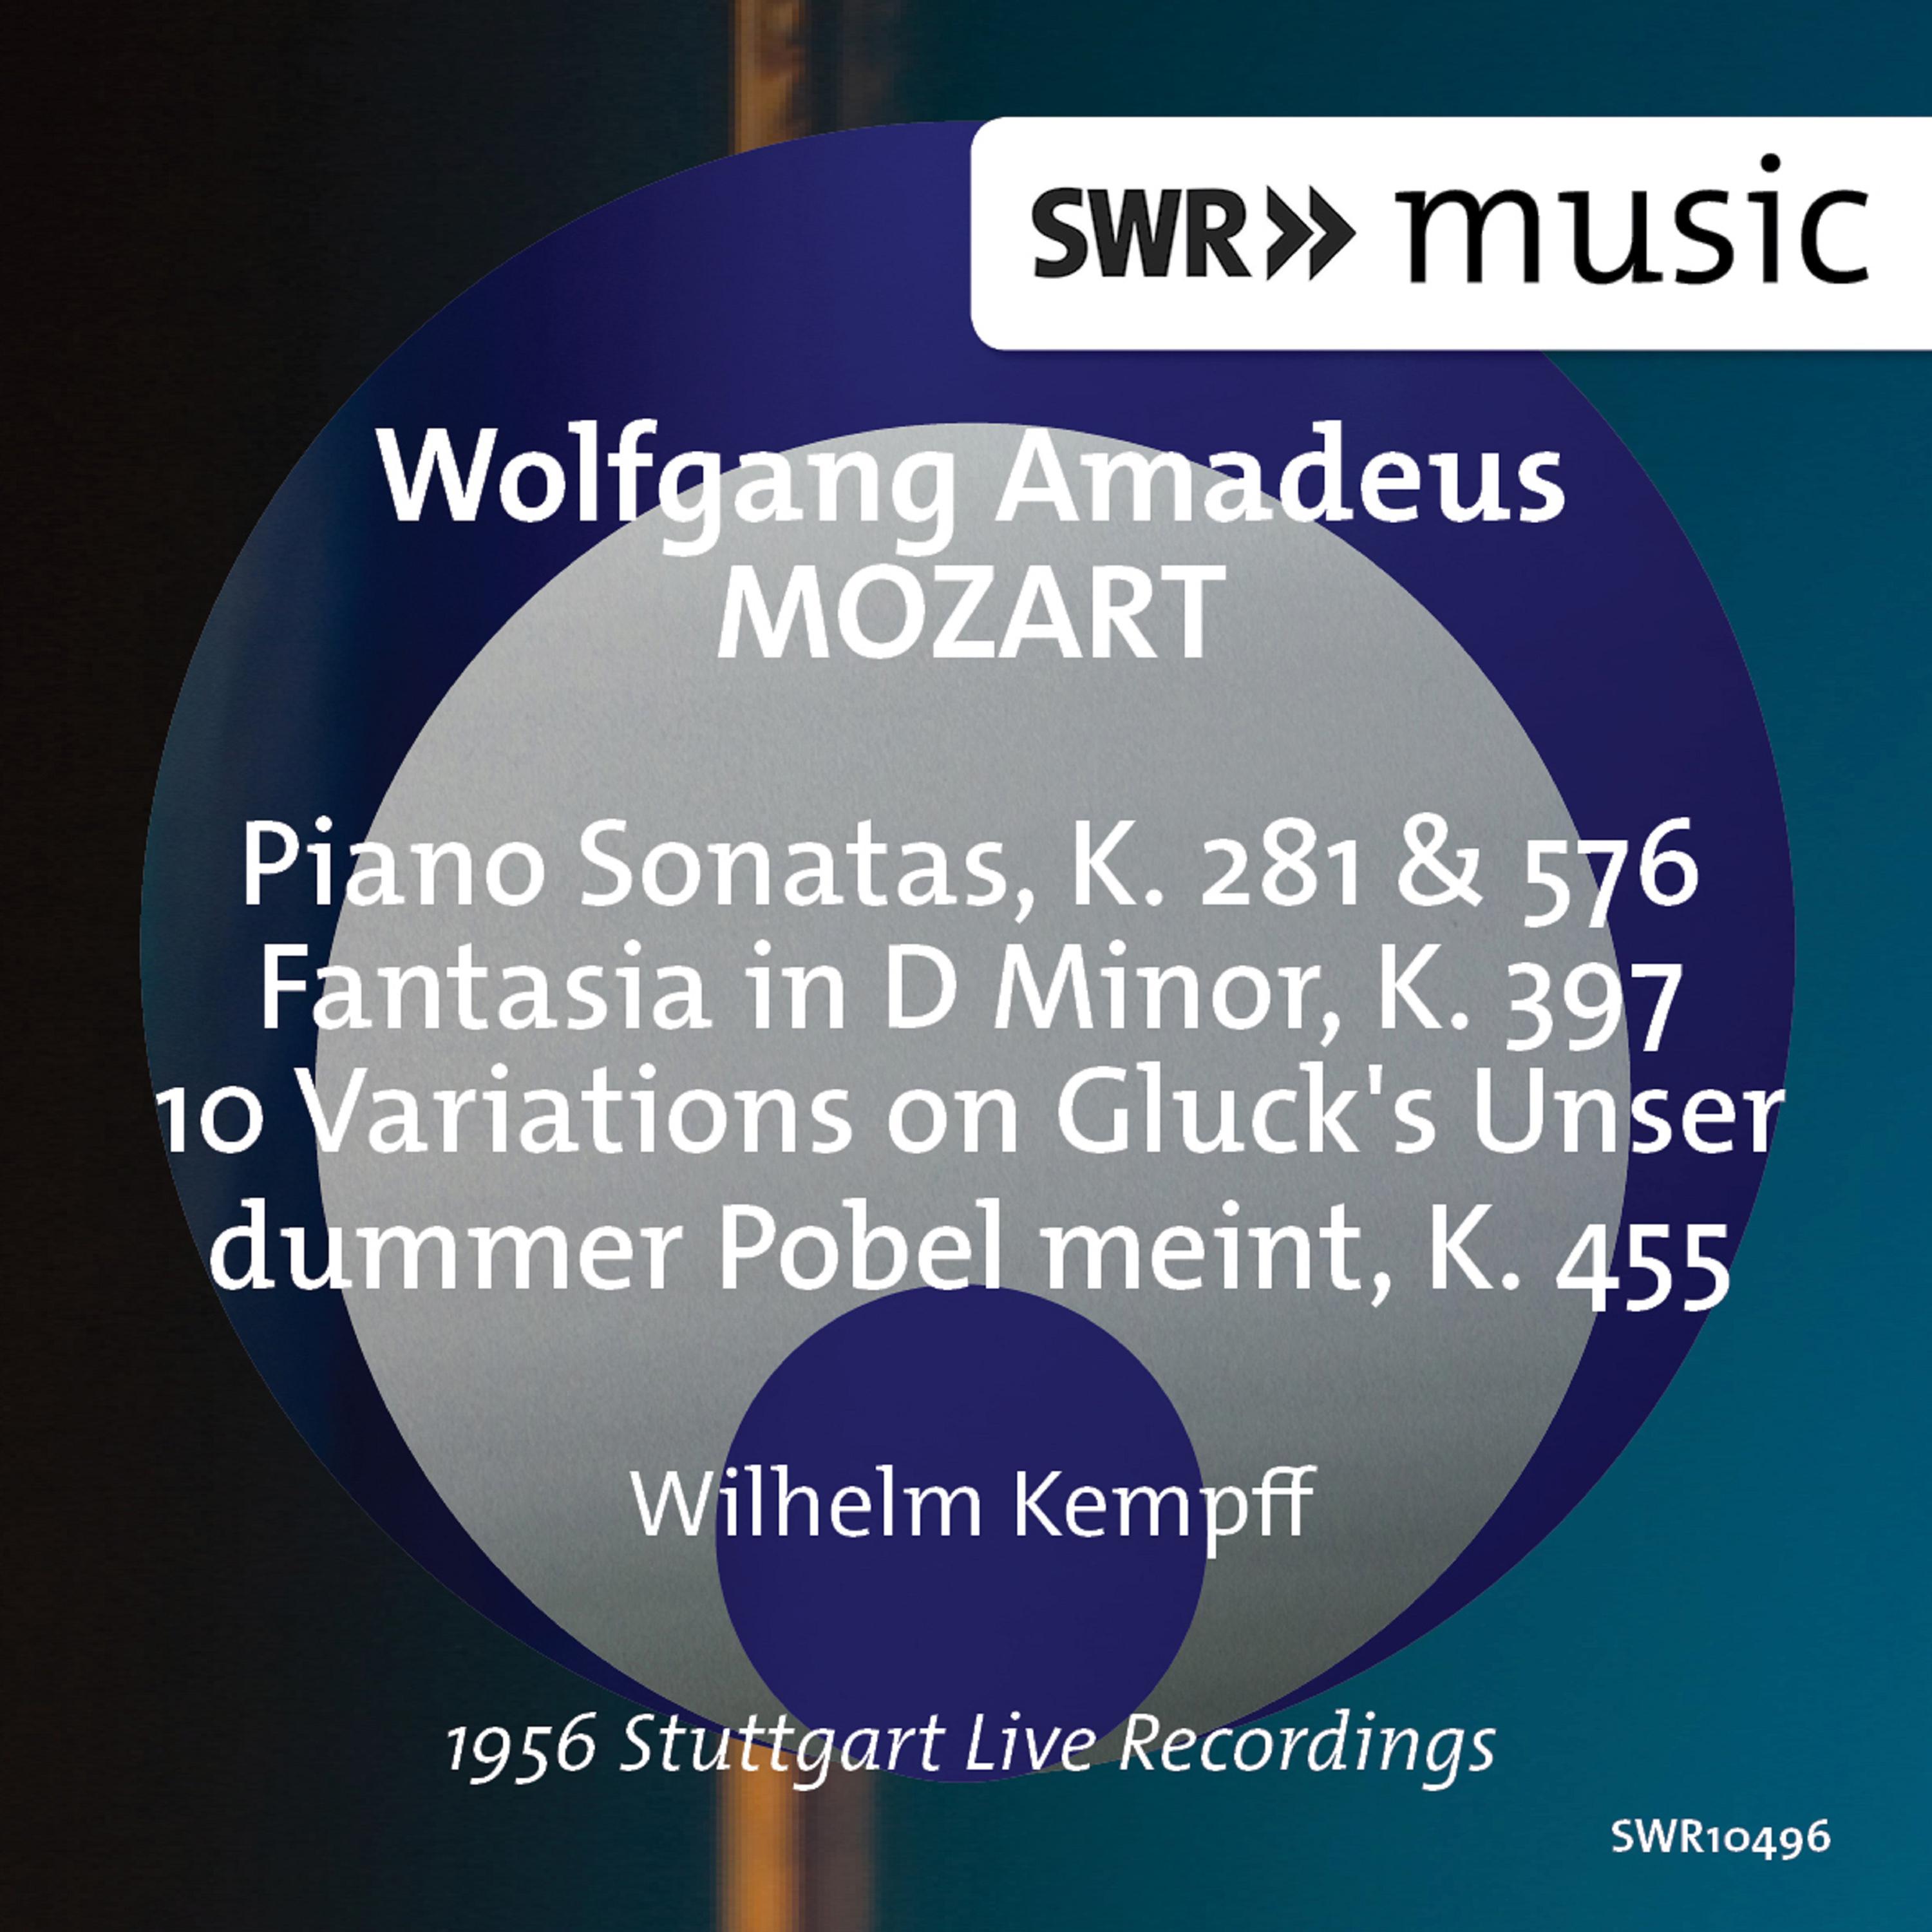 MOZART, W.A.: Piano Sonatas Nos. 3 and 18 / Fantasia, K. 397 / 10 Variations on Gluck's Unser dummer Pobel meint (W. Kempff)